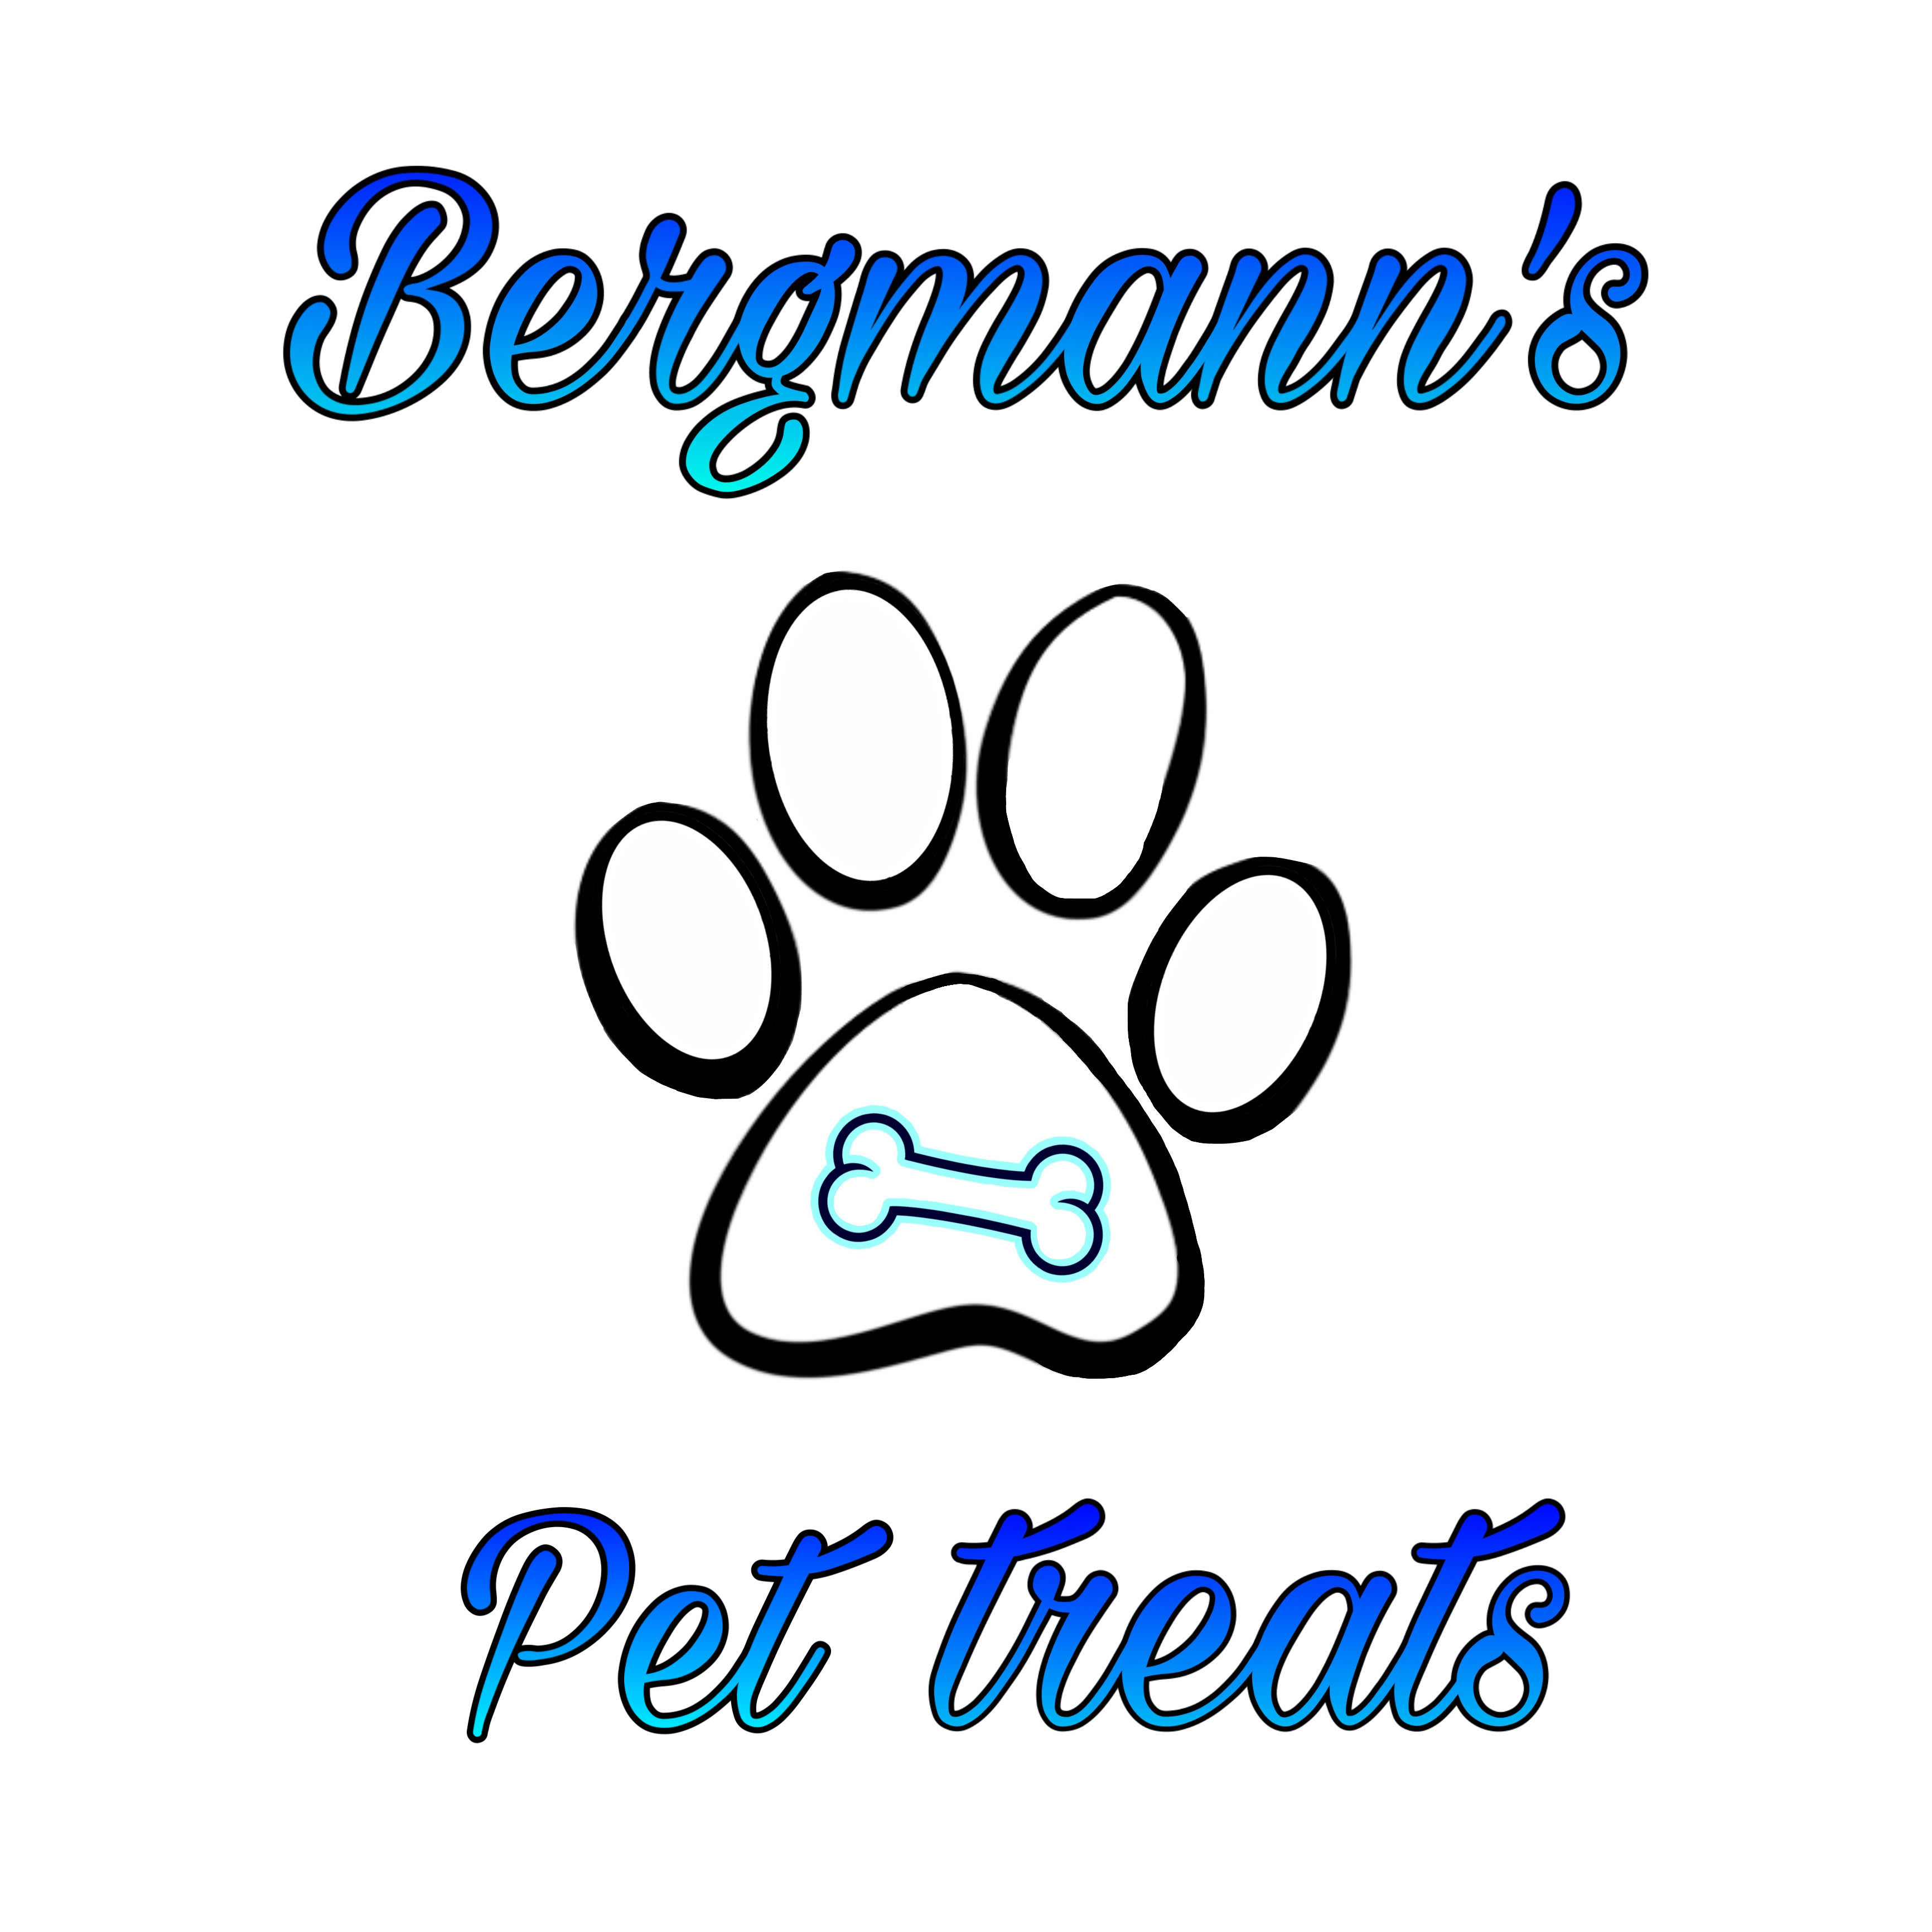 Bergmann’s Pet Treats